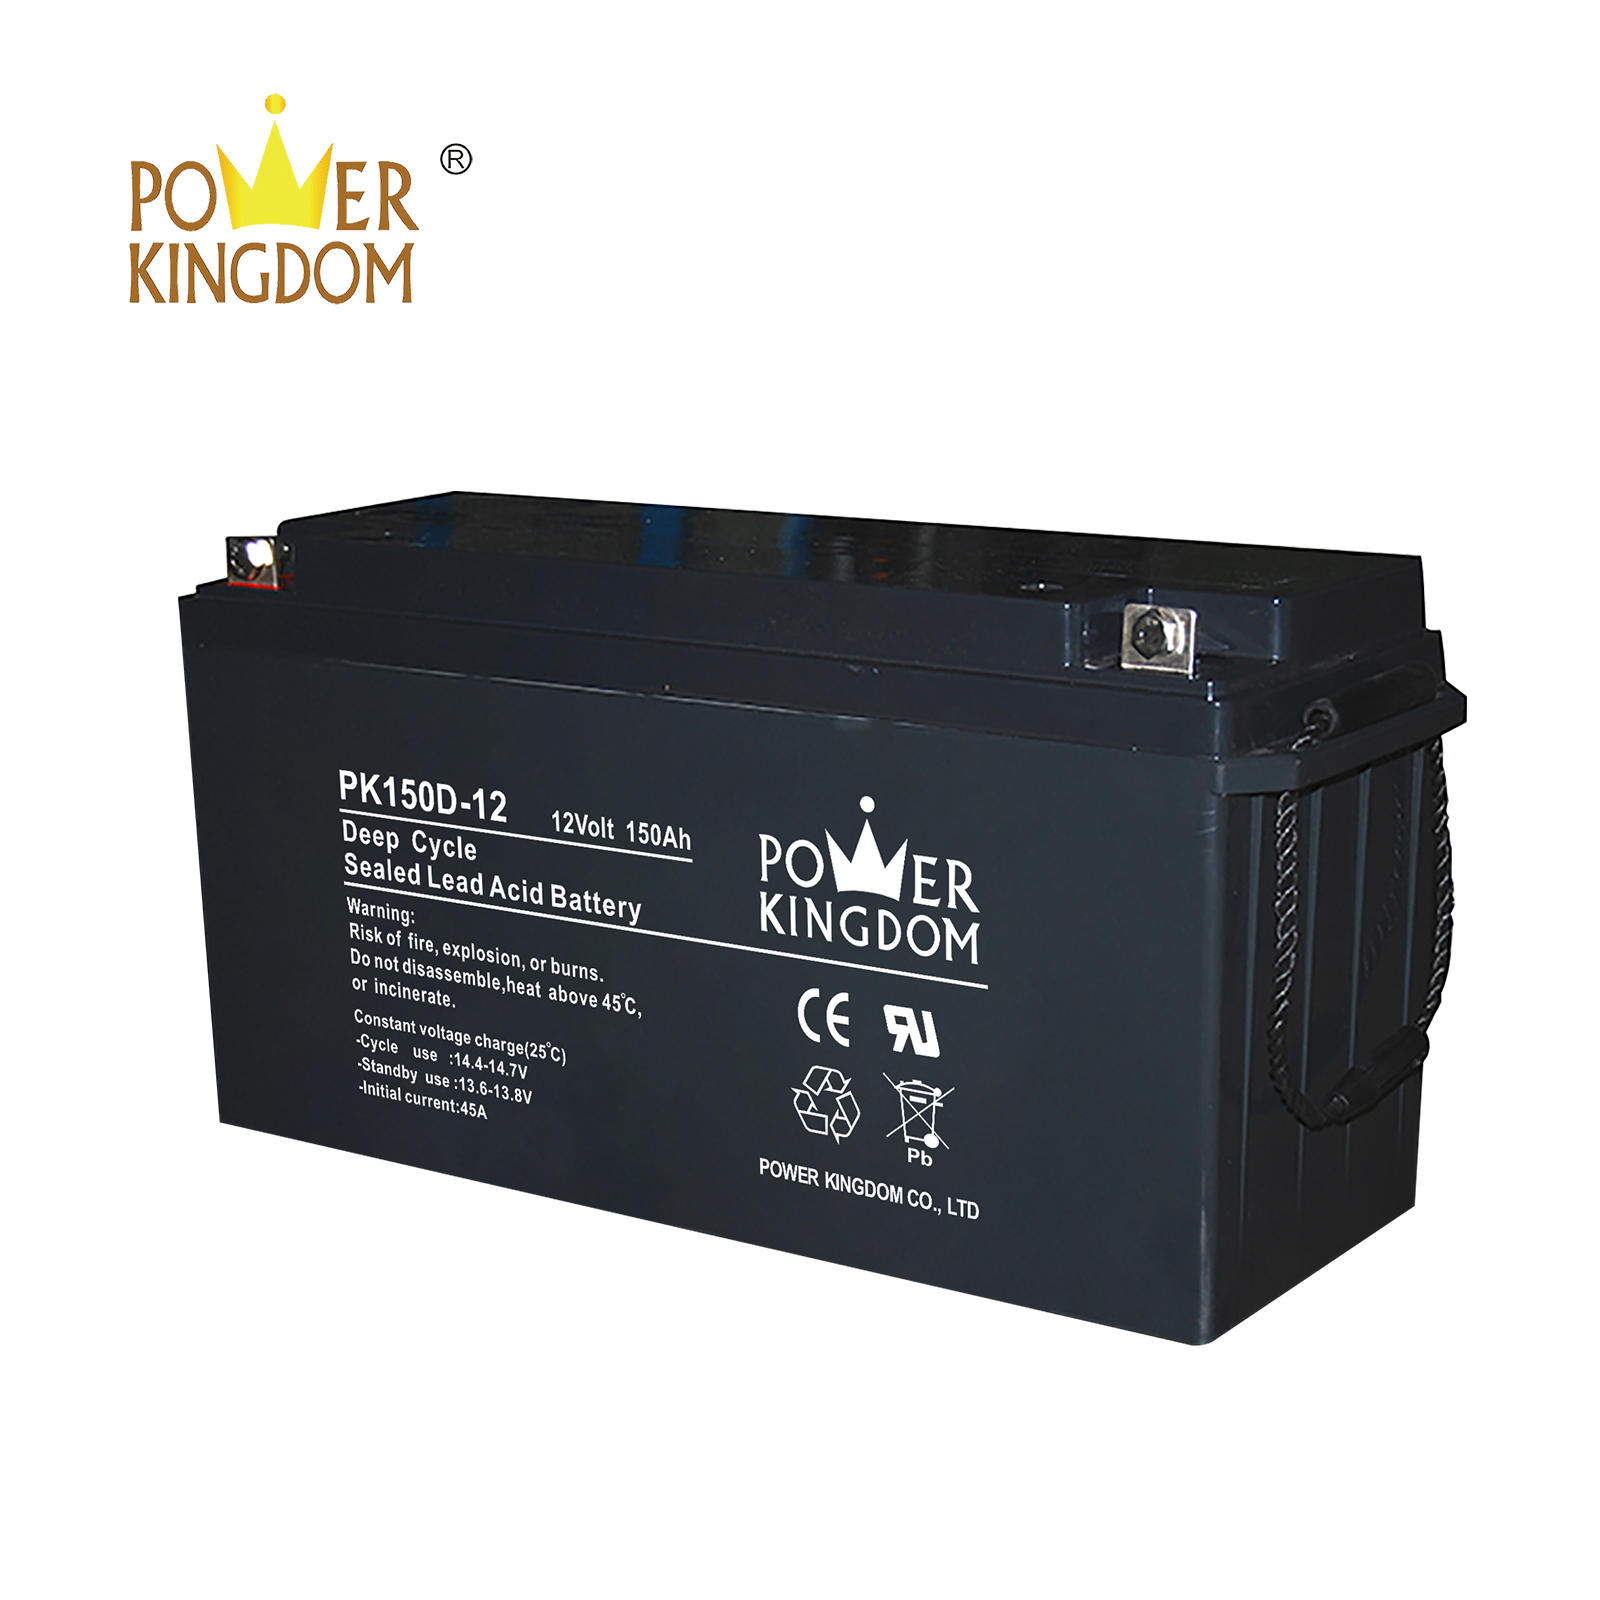 Power Kingdom 12v 150ah deep cycle battery